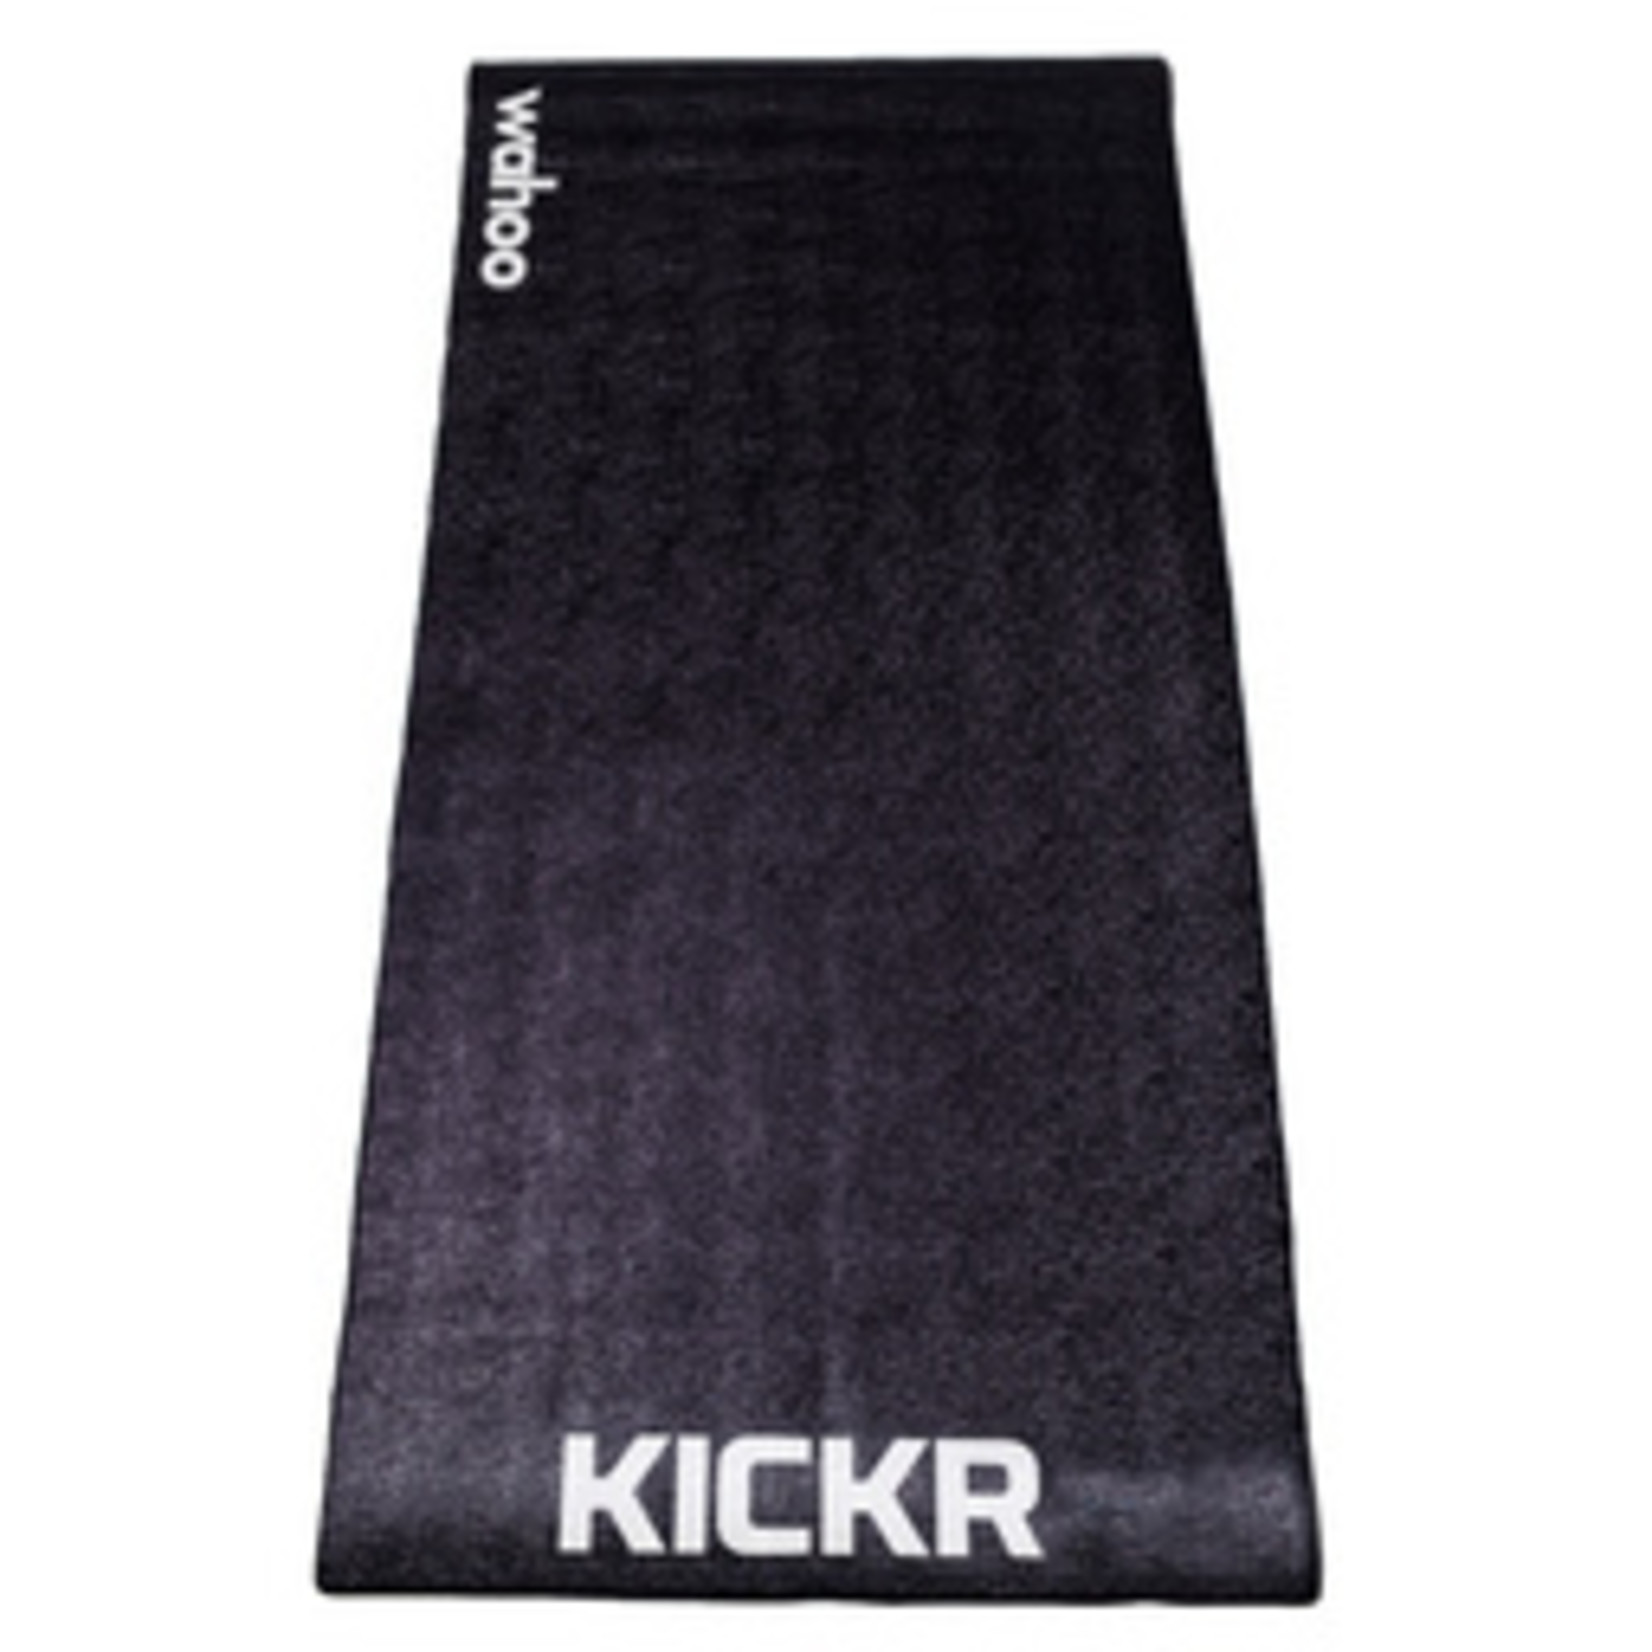 Wahoo Wahoo KICKR Trainer Floor Mat -Measures 3 x 6 feet- 6mm Thick